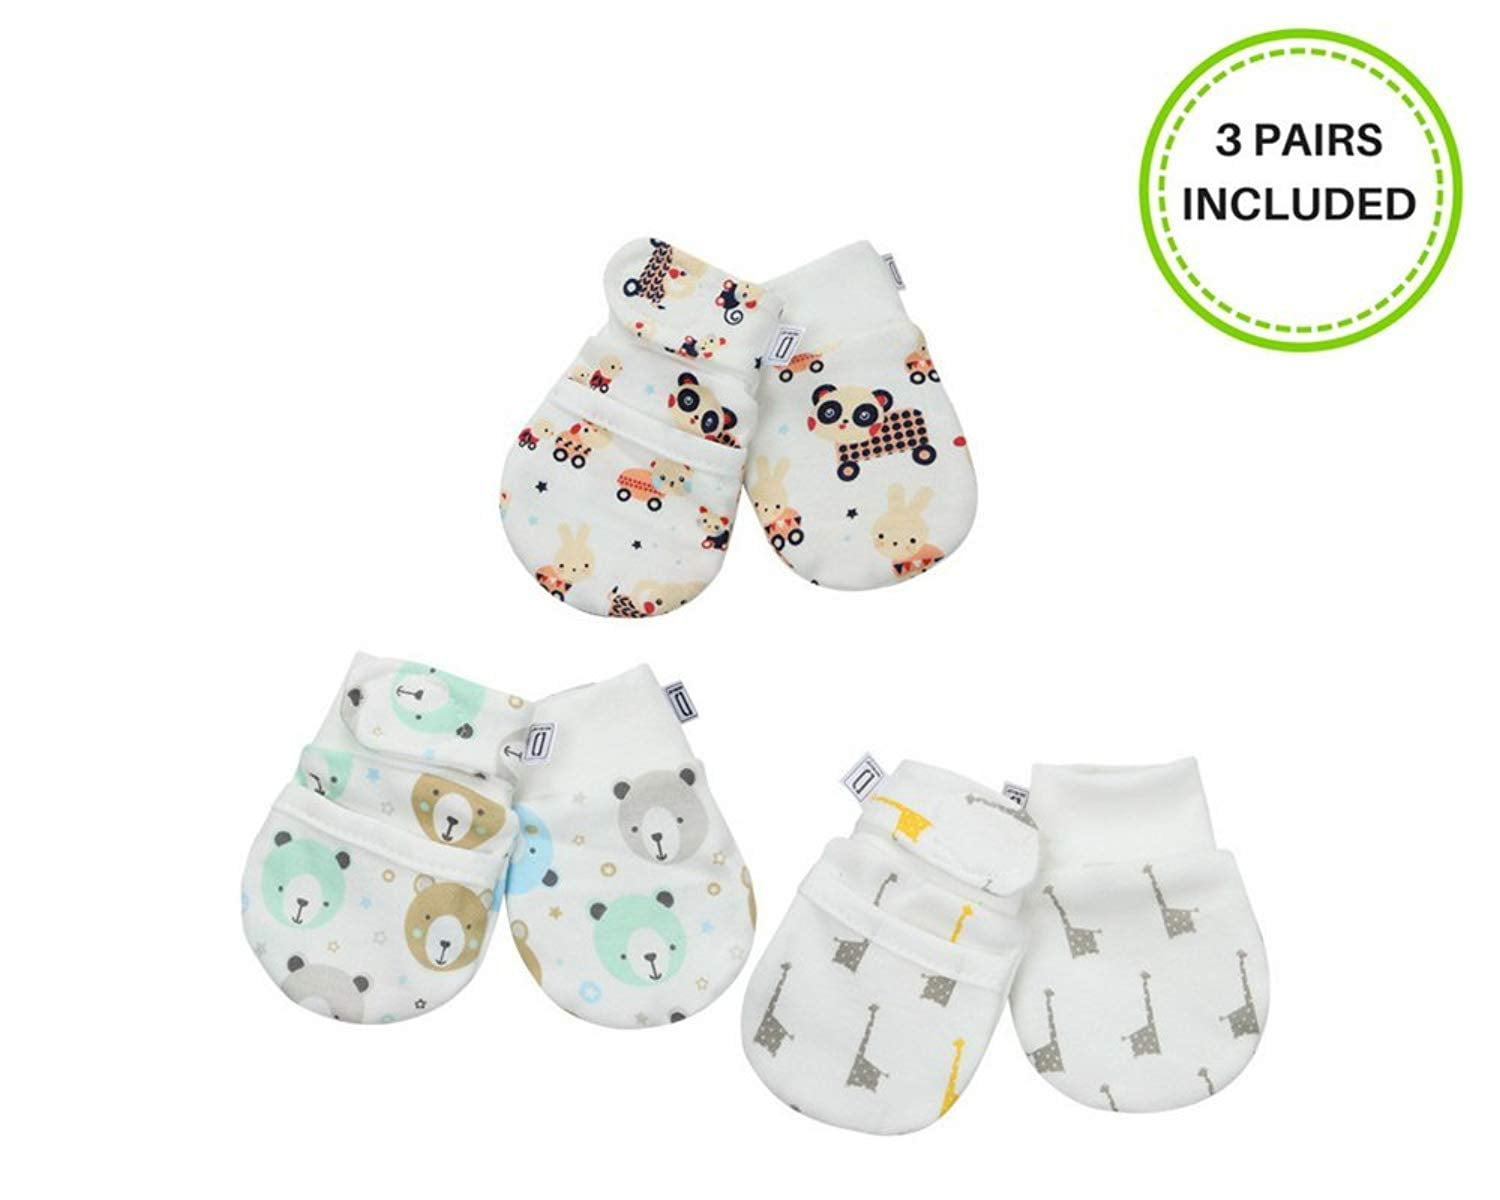 14 Pairs Newborn Baby Mittens Soft Cotton No Scratch Mittens Infant Toddler Gloves for 0-6 Months Baby Boys Girls 